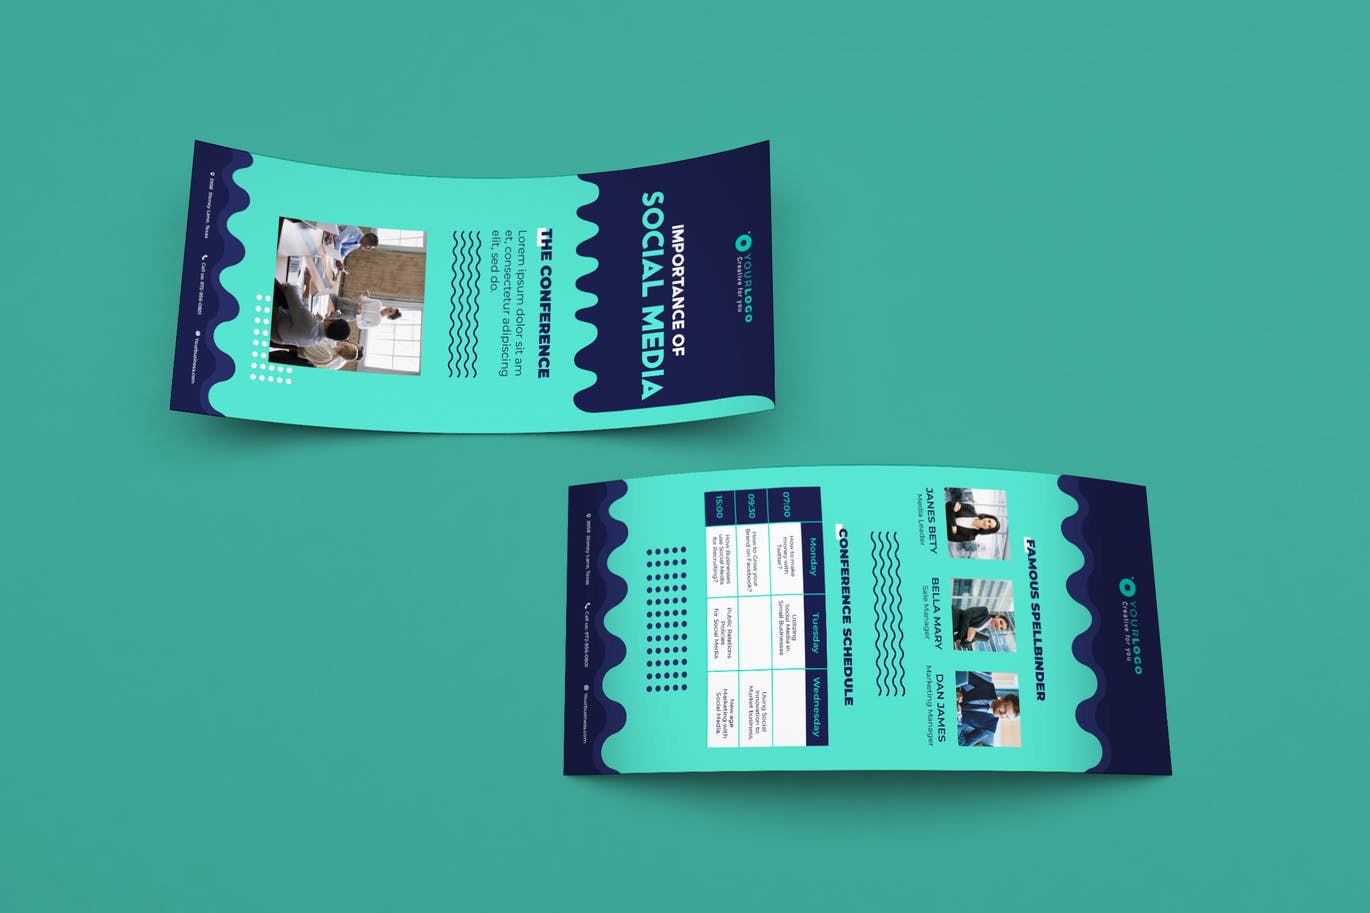 会议/演讲/讲座等活动商业广告卡设计模板 Event Conference DL Rackcard Illustrator Template插图